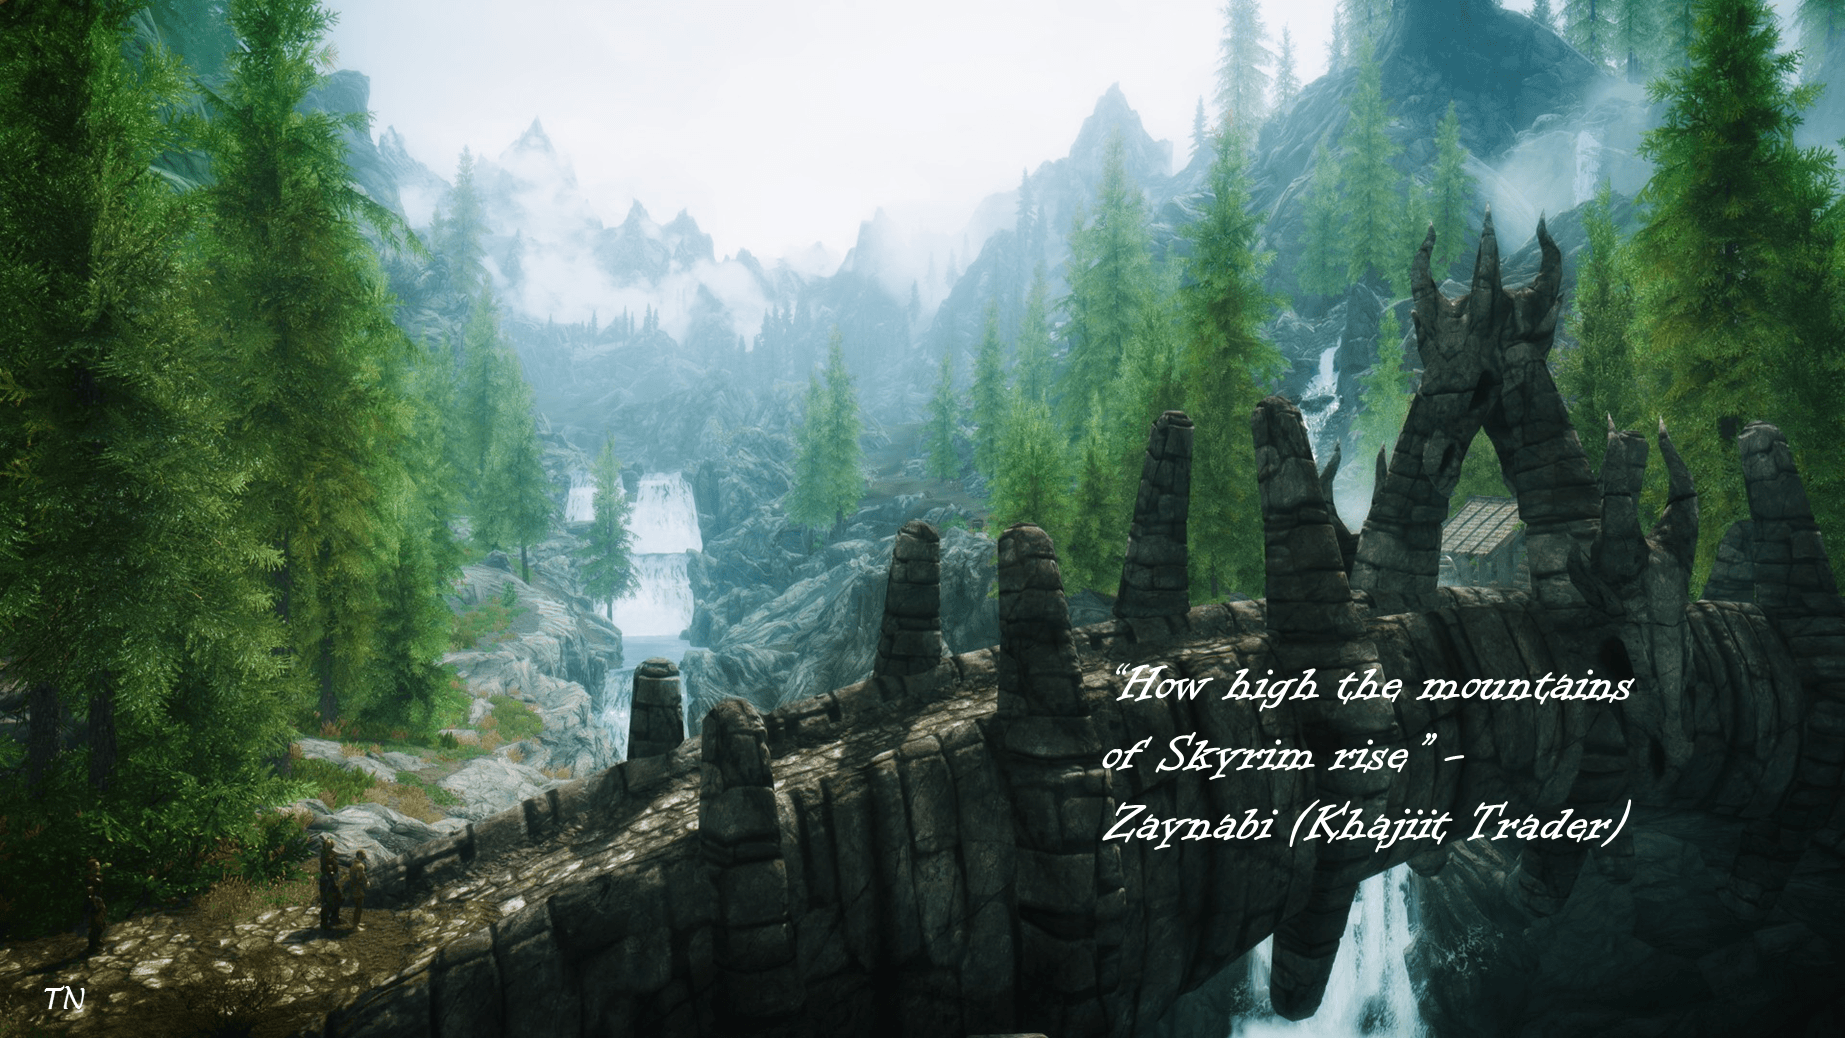 Skyrim Quote I made Using Dragon's Bridge as a background